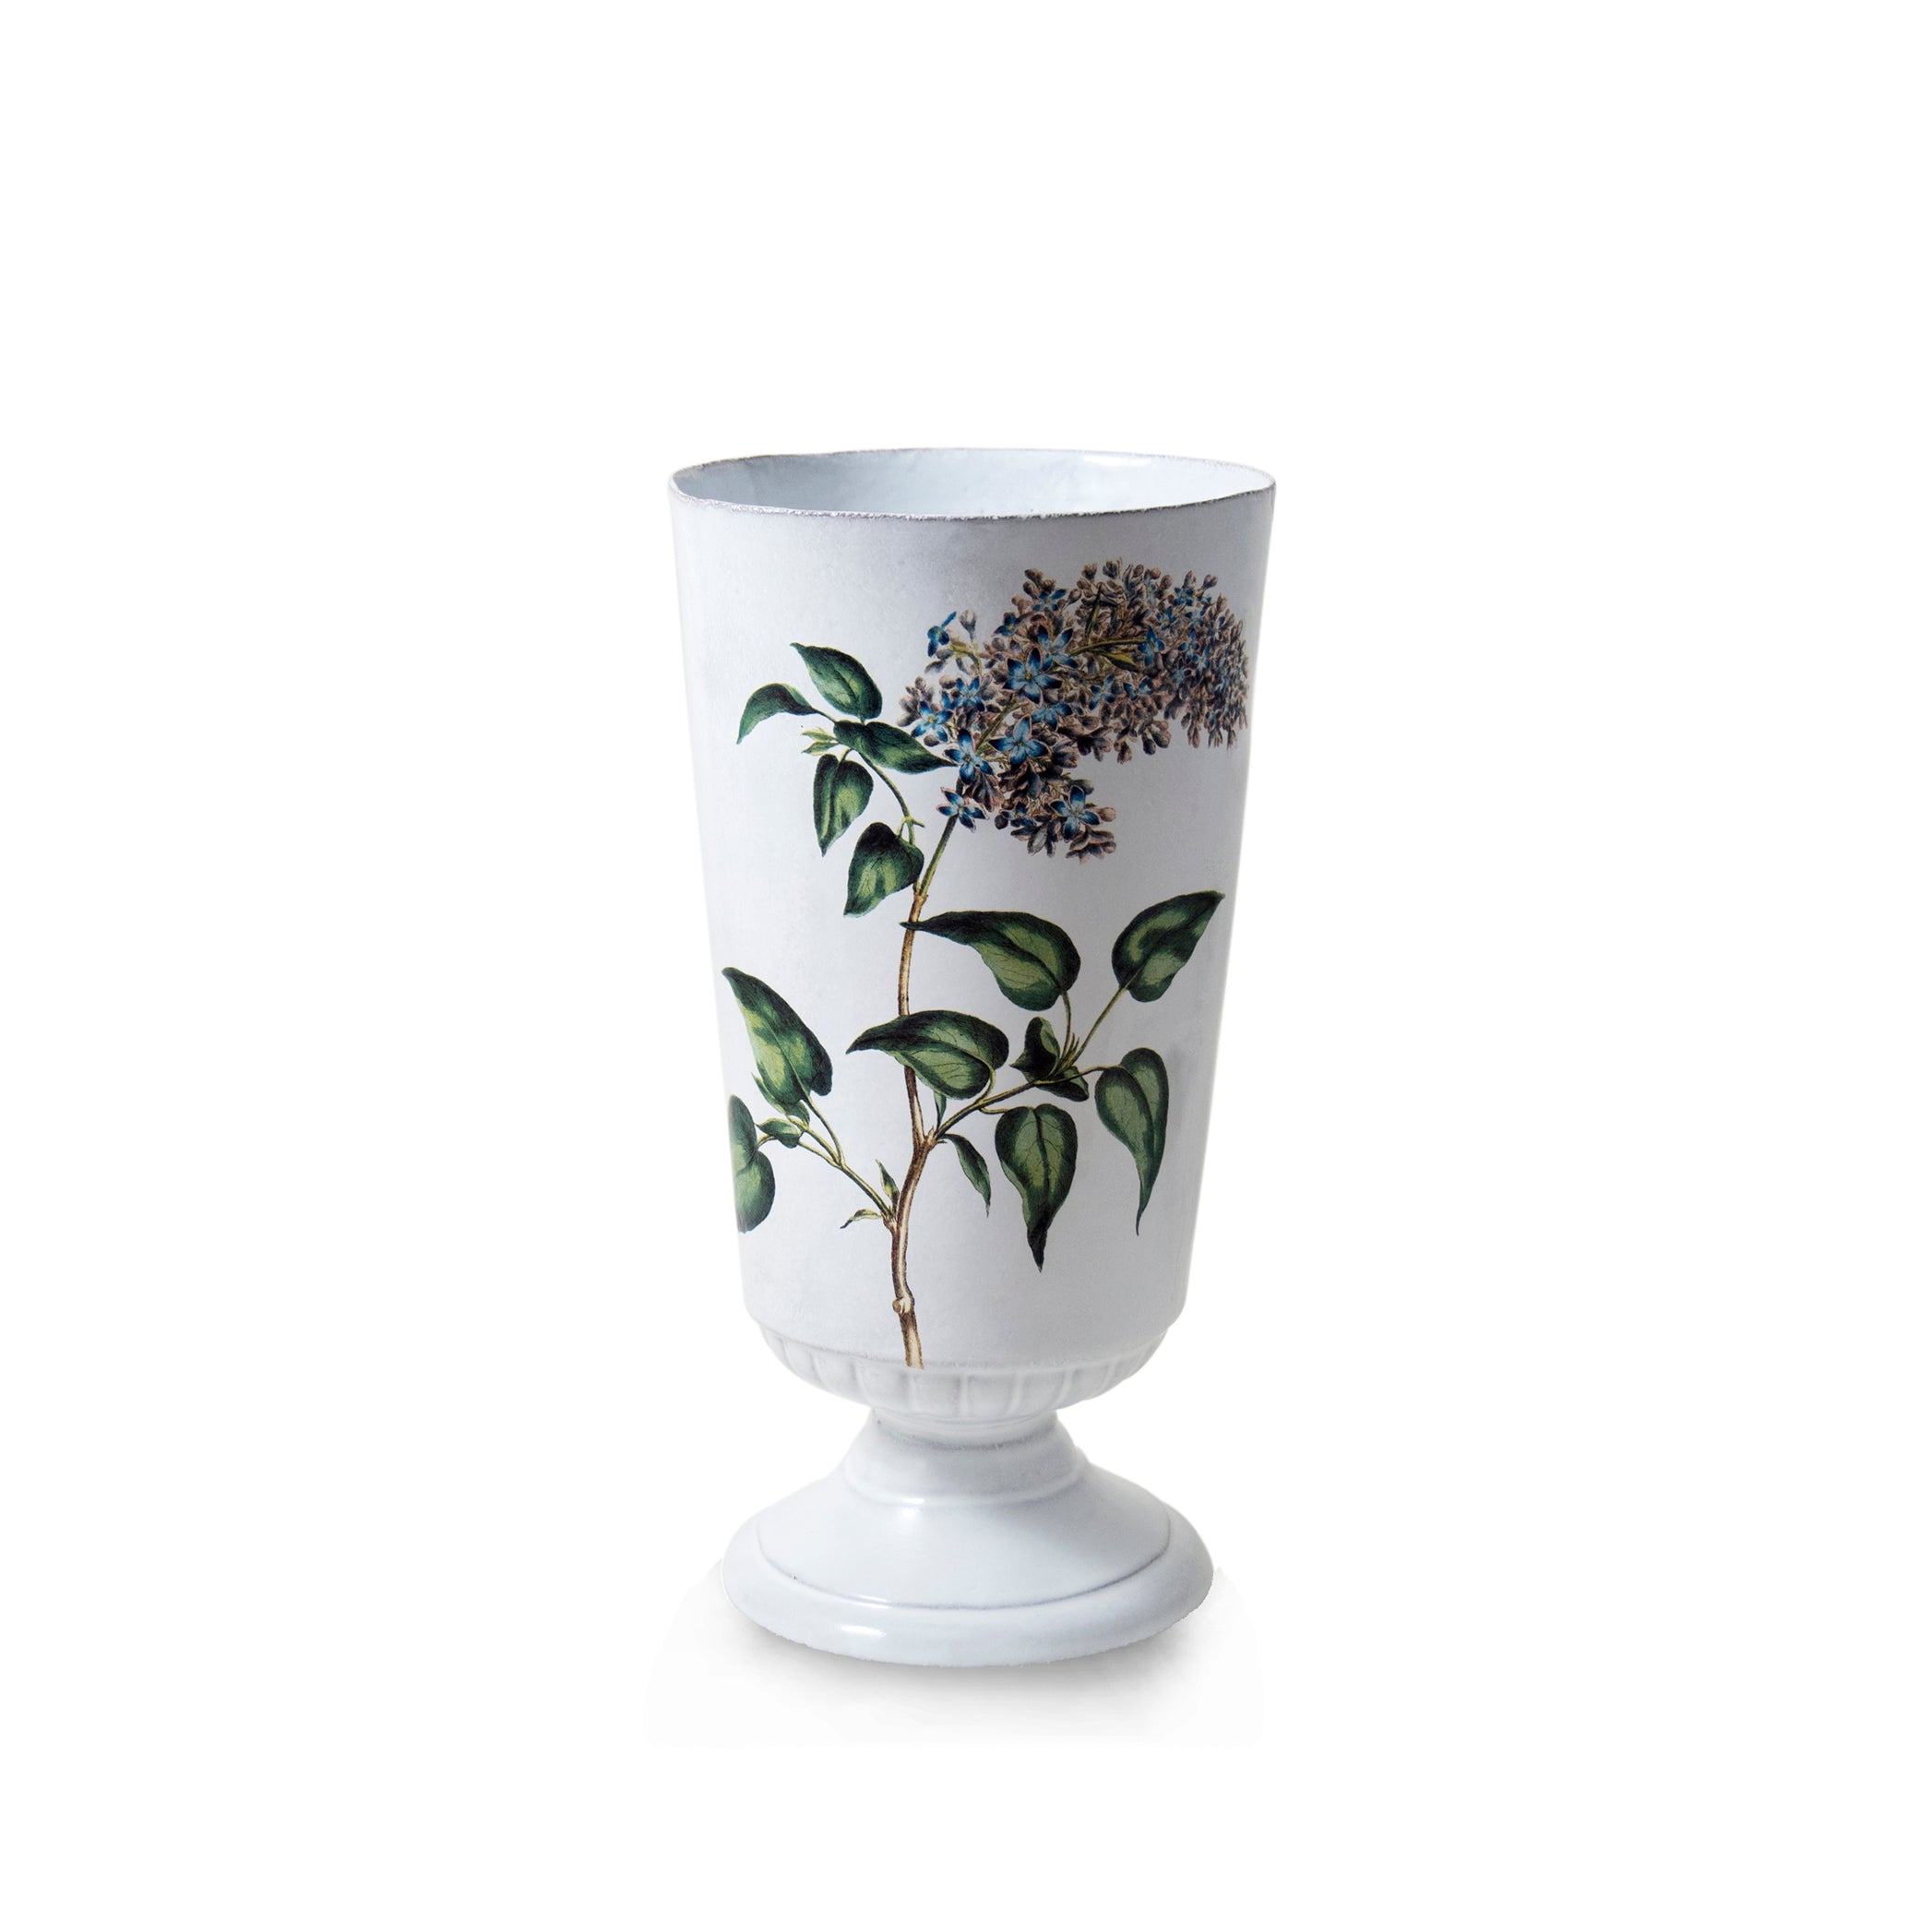 Lilac Vase by Astier de Villatte, 33.5cm